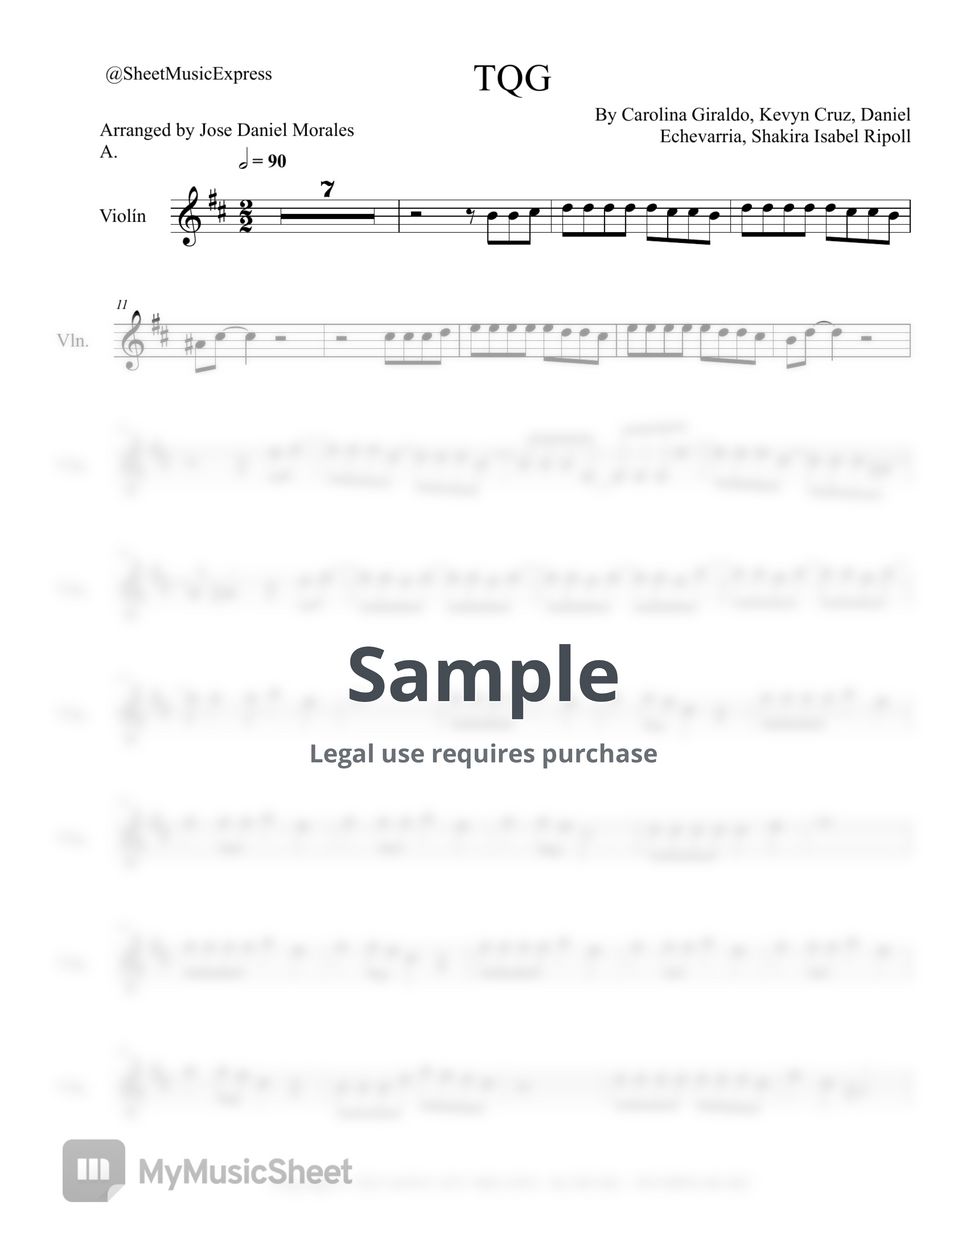 Karol G - TQG violin (Latin) by Sheet Music Express